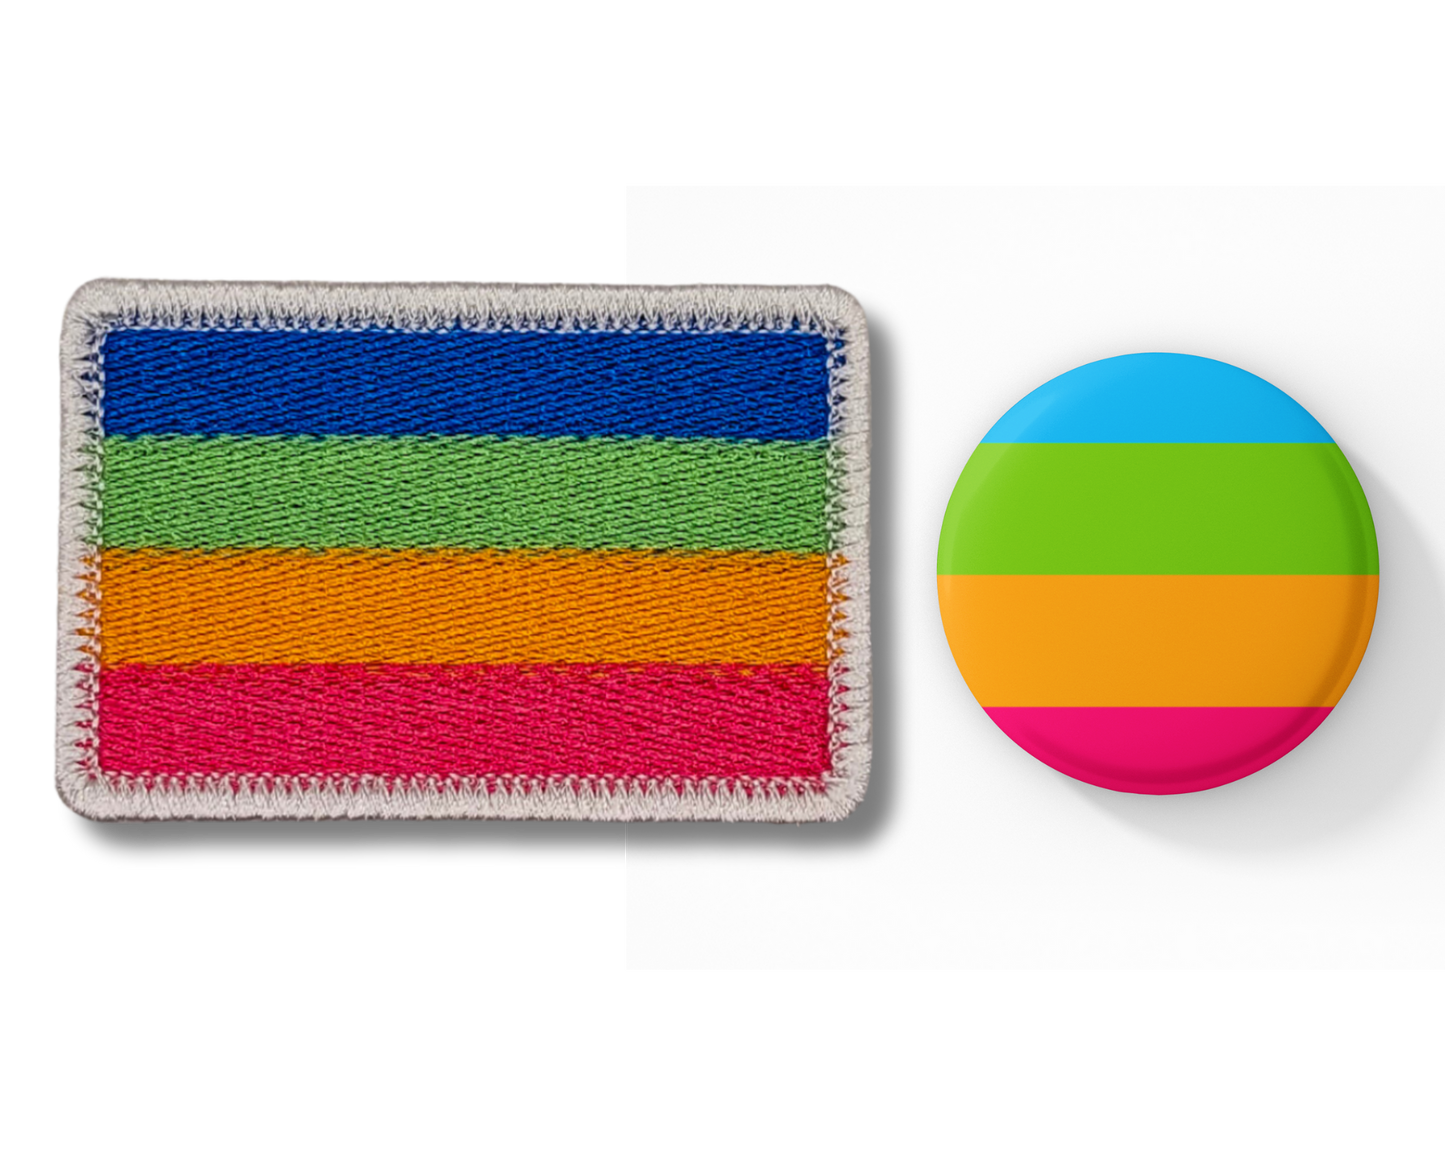 Pangender Pride Flag Patch & Pinback Button